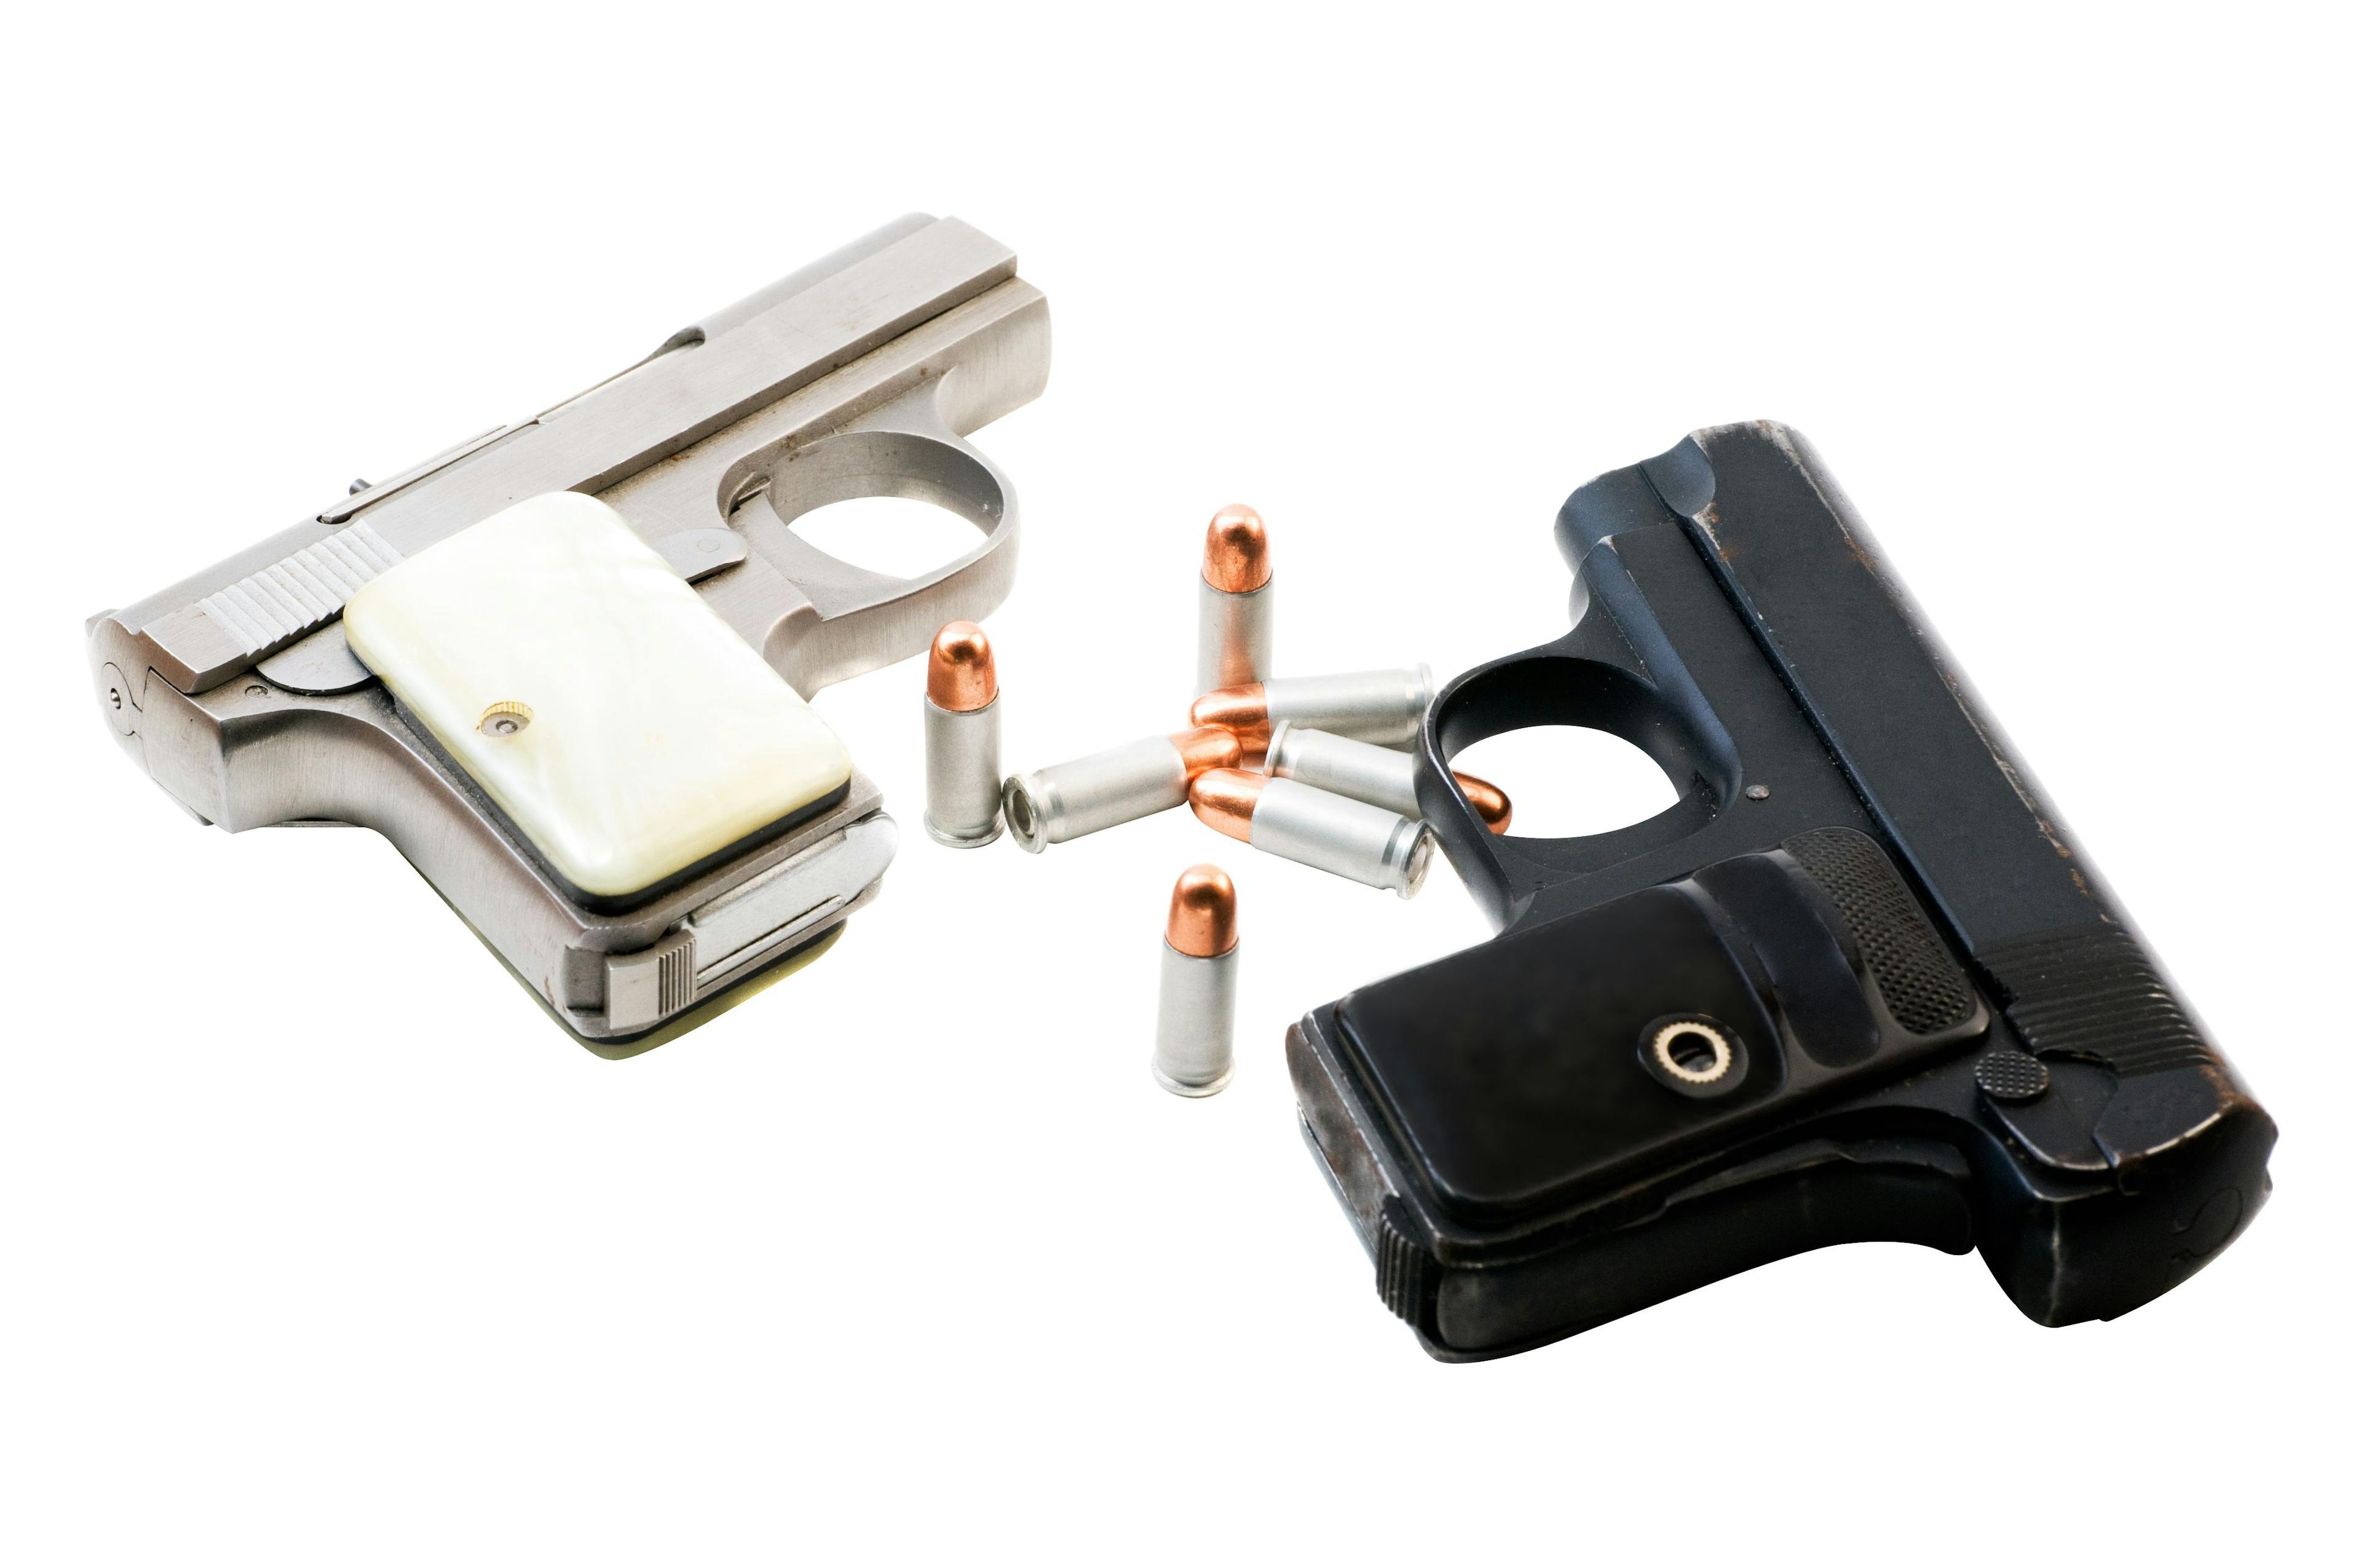 Two .25 caliber automatic pistols | Image Credit: © rCarner - stock.adobe.com